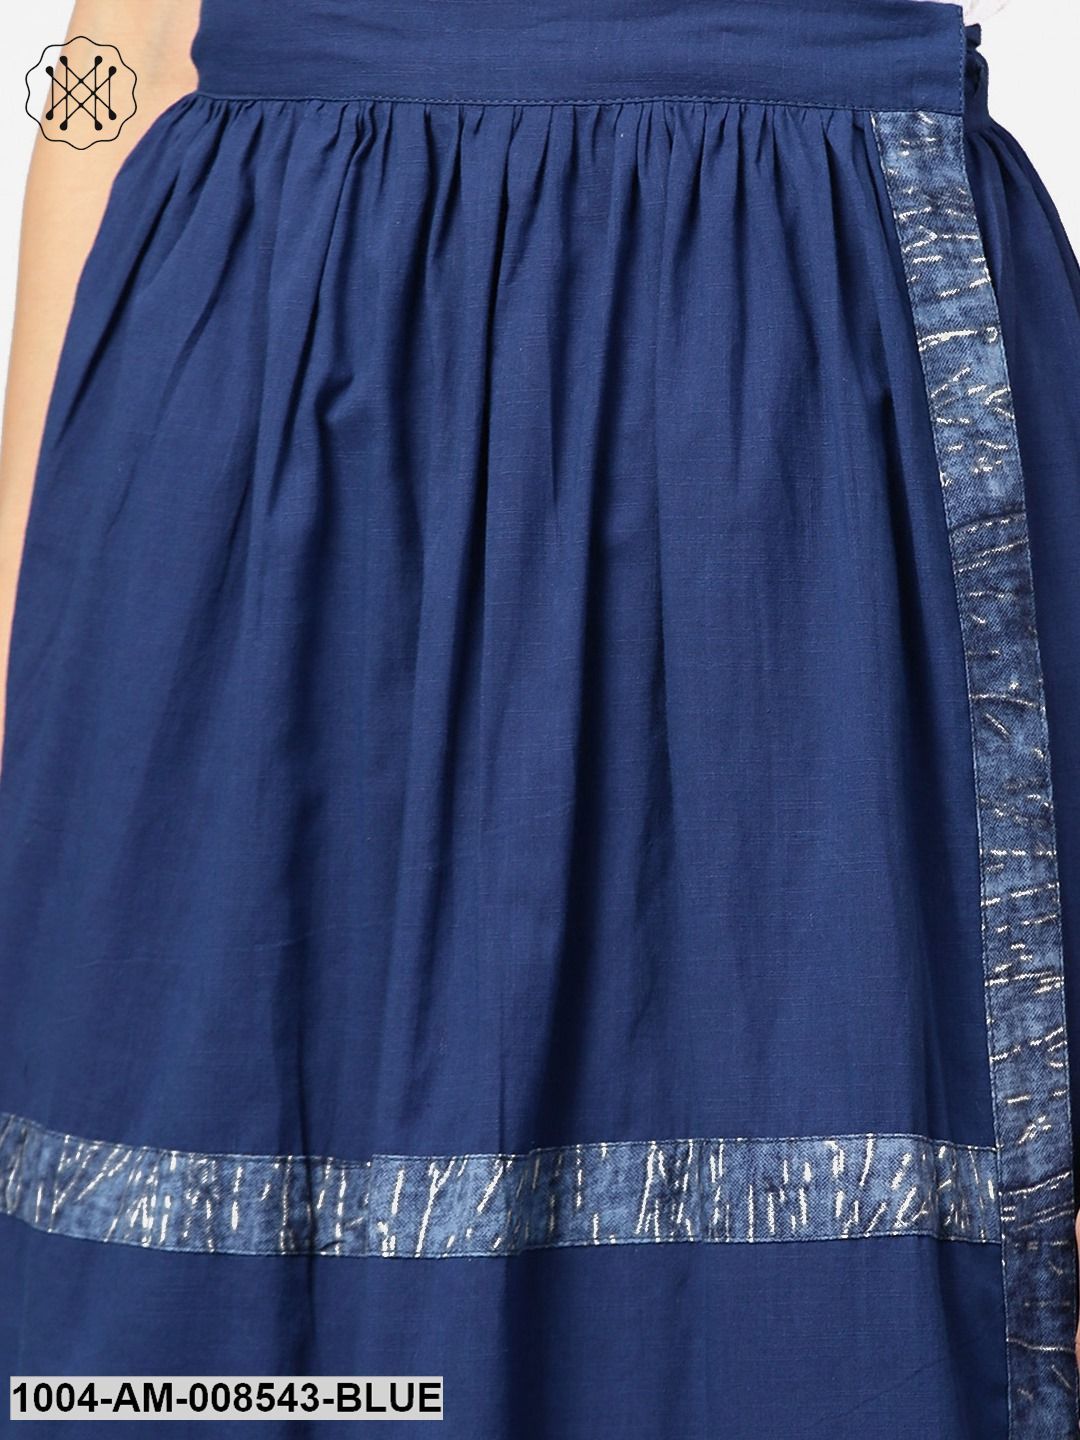 Blue Midi Length Cotton Flared Skirt